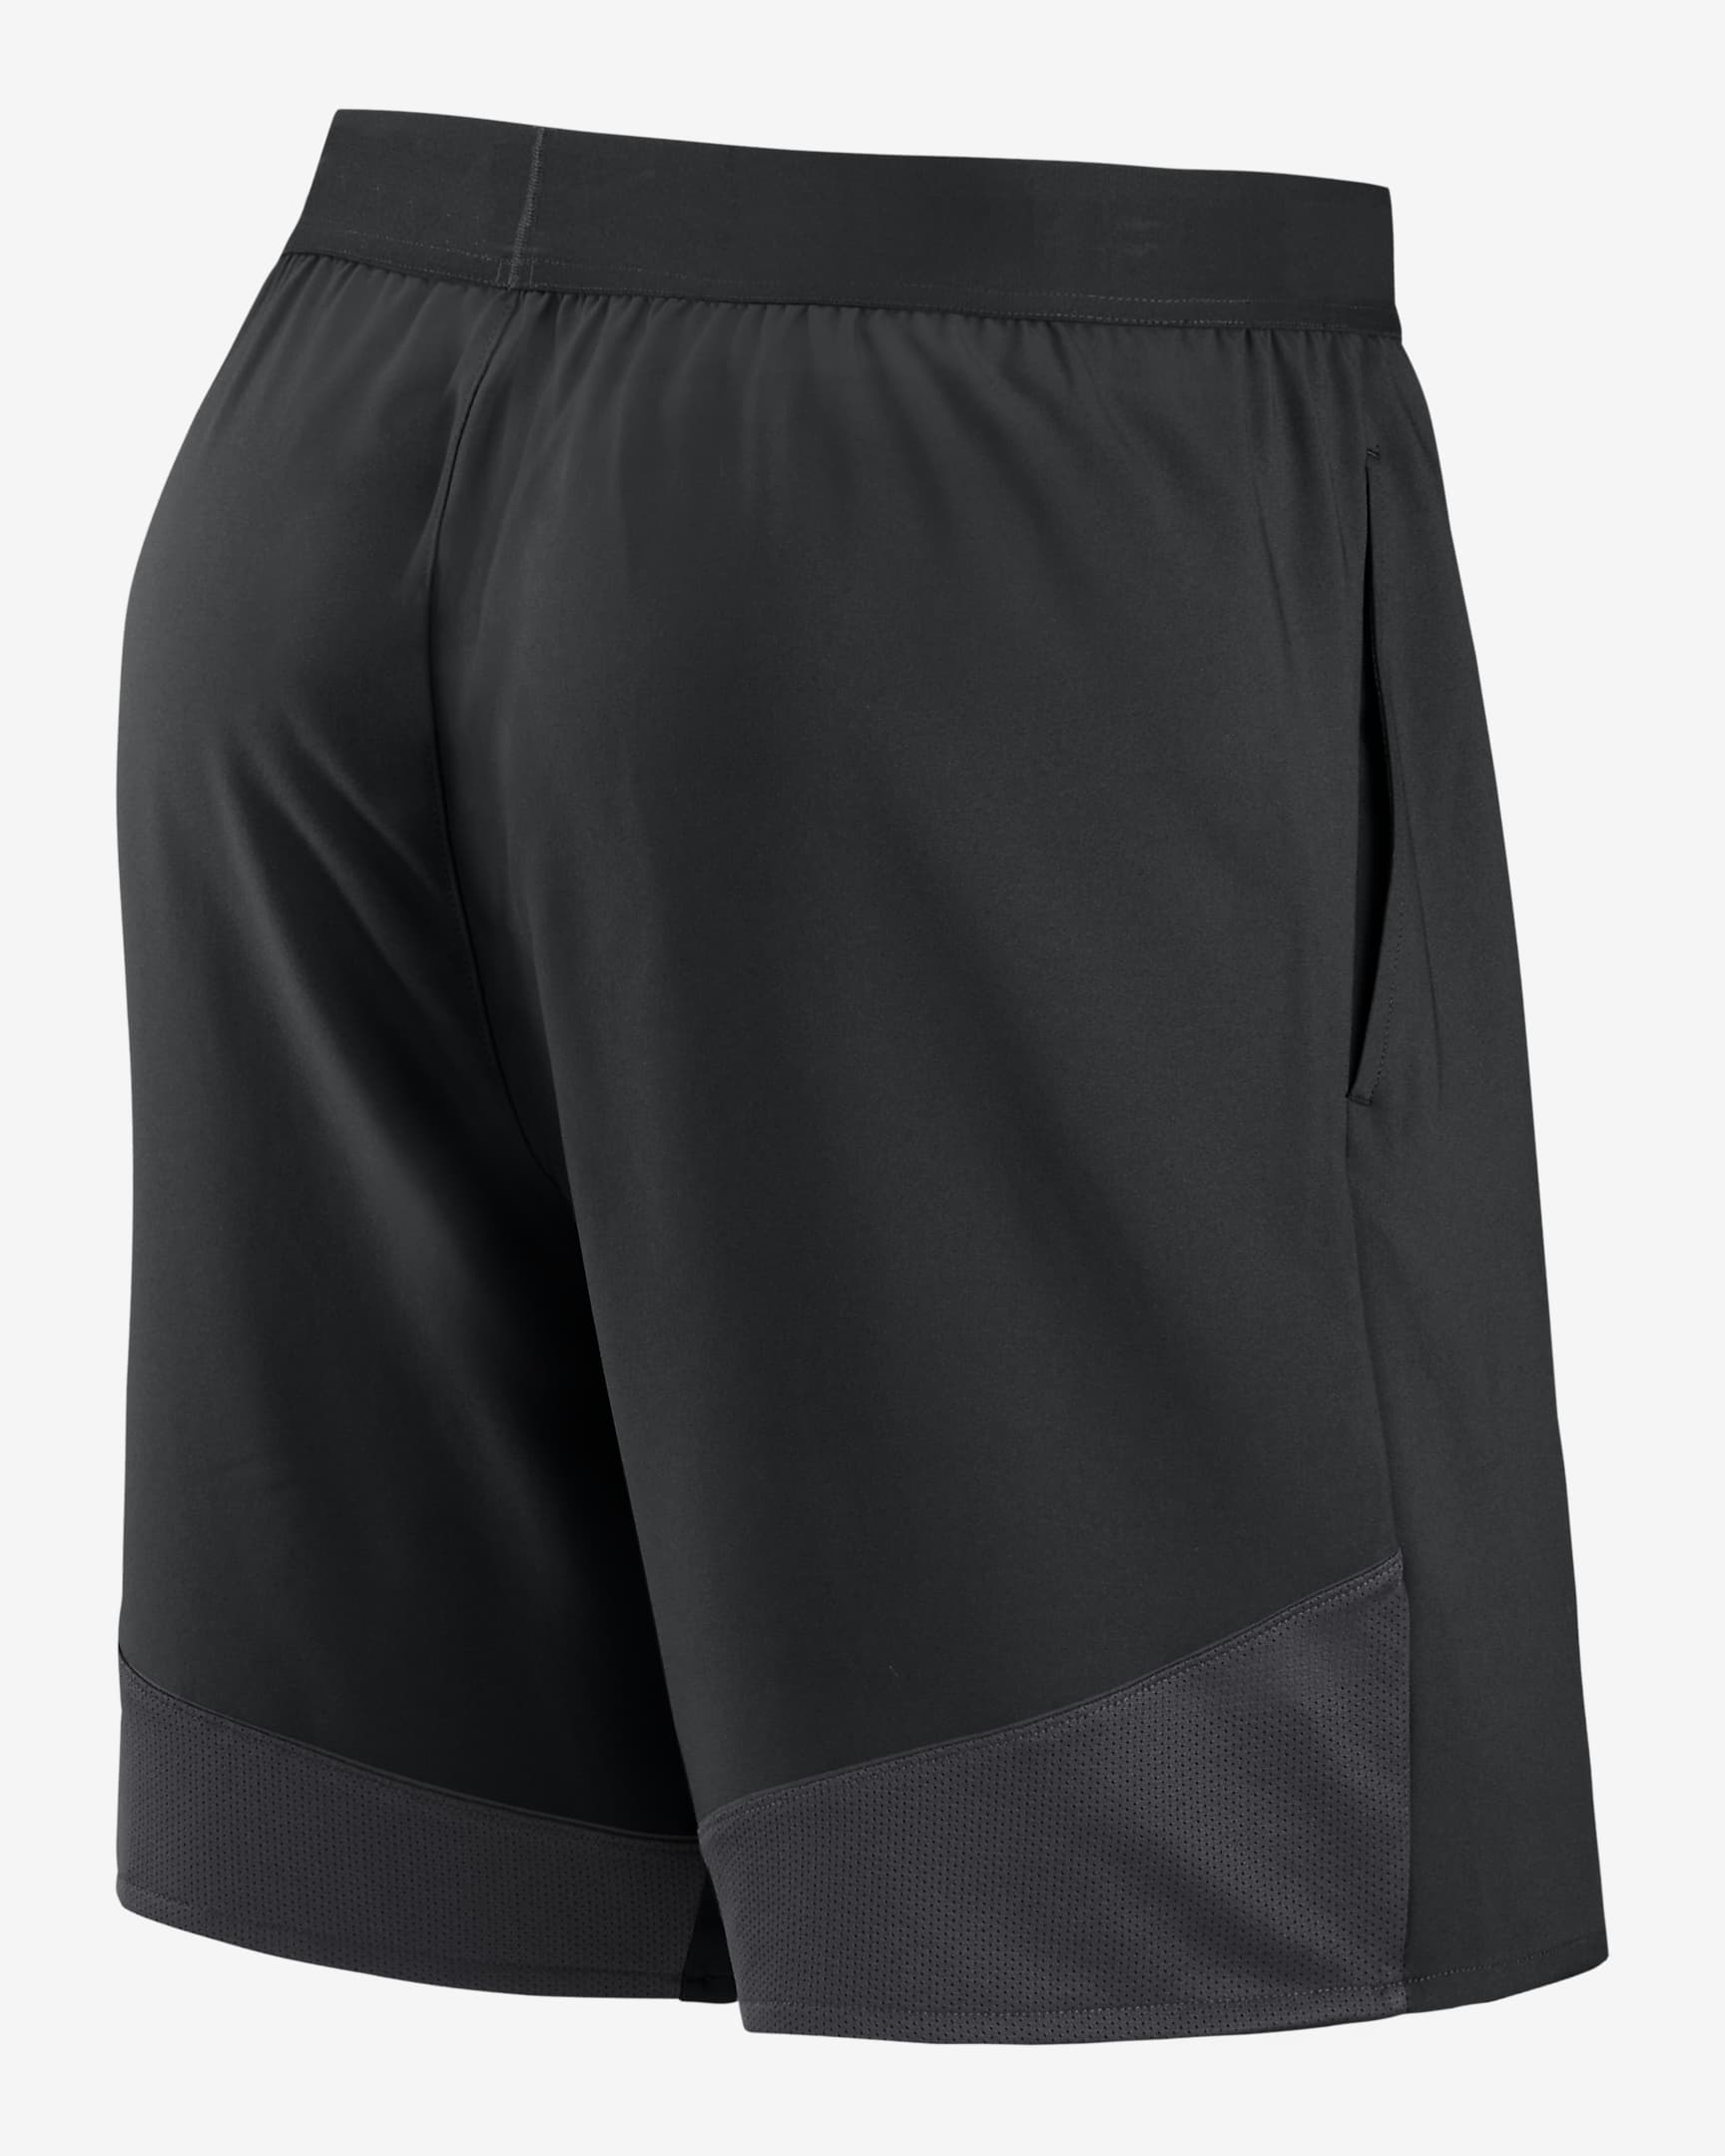 Nike Dri-FIT Stretch (NFL Las Vegas Raiders) Men's Shorts. Nike.com